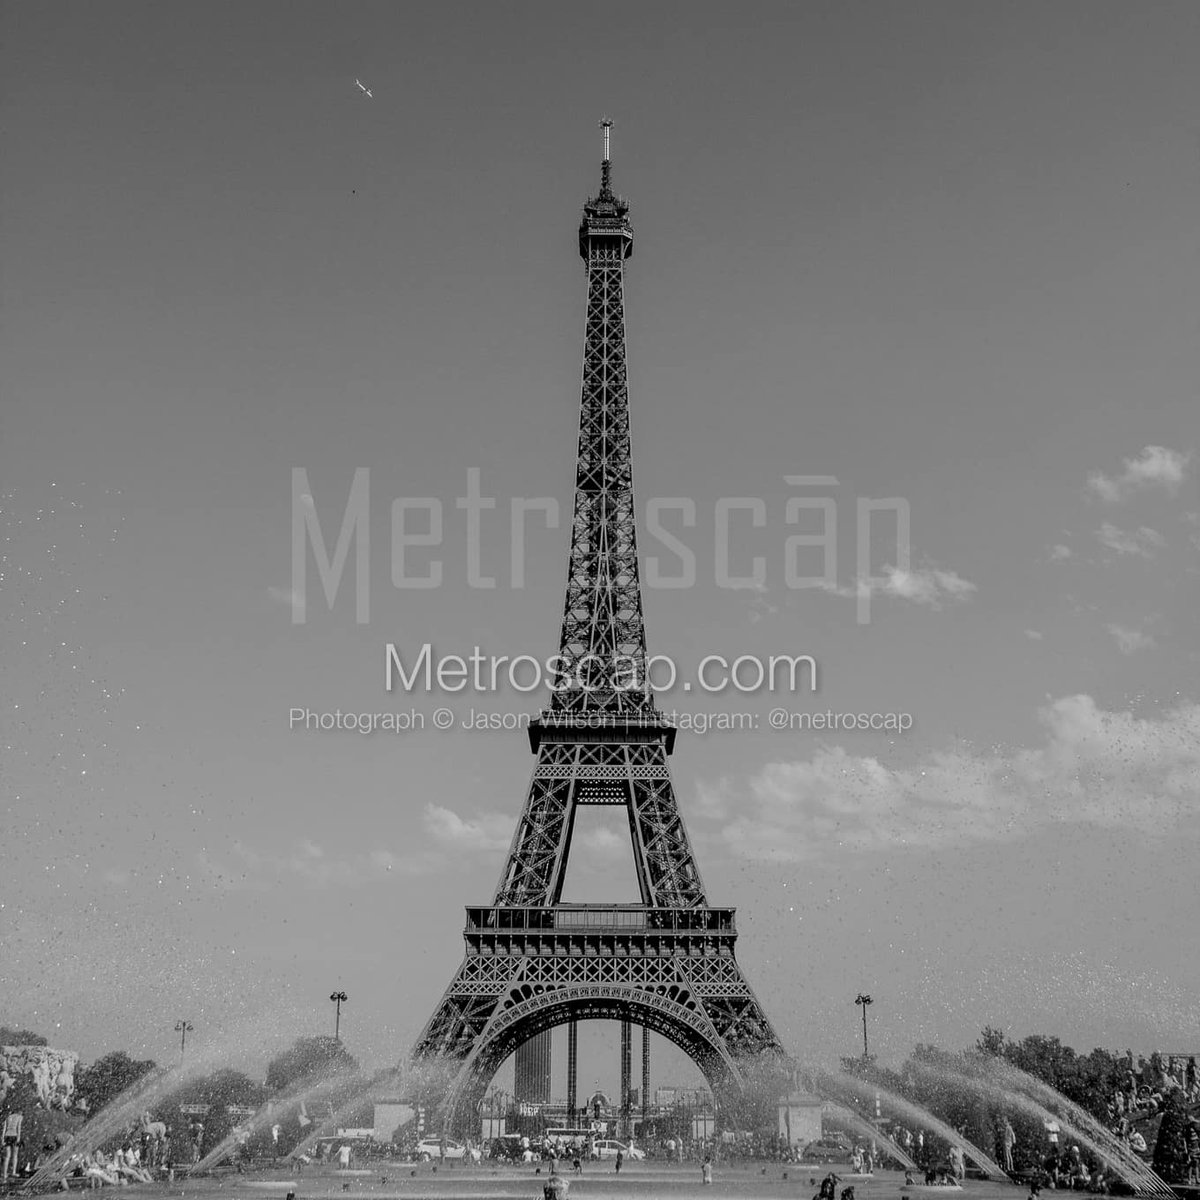 Paris images Black & White: The Eiffel Tower from the Fountains in the Trocadero Gardens #Paris #france #louvre #champselysees #arcdetriomphe #trocadero #notredame #seine #BlackWhite | metroscap.com/paris-architec…